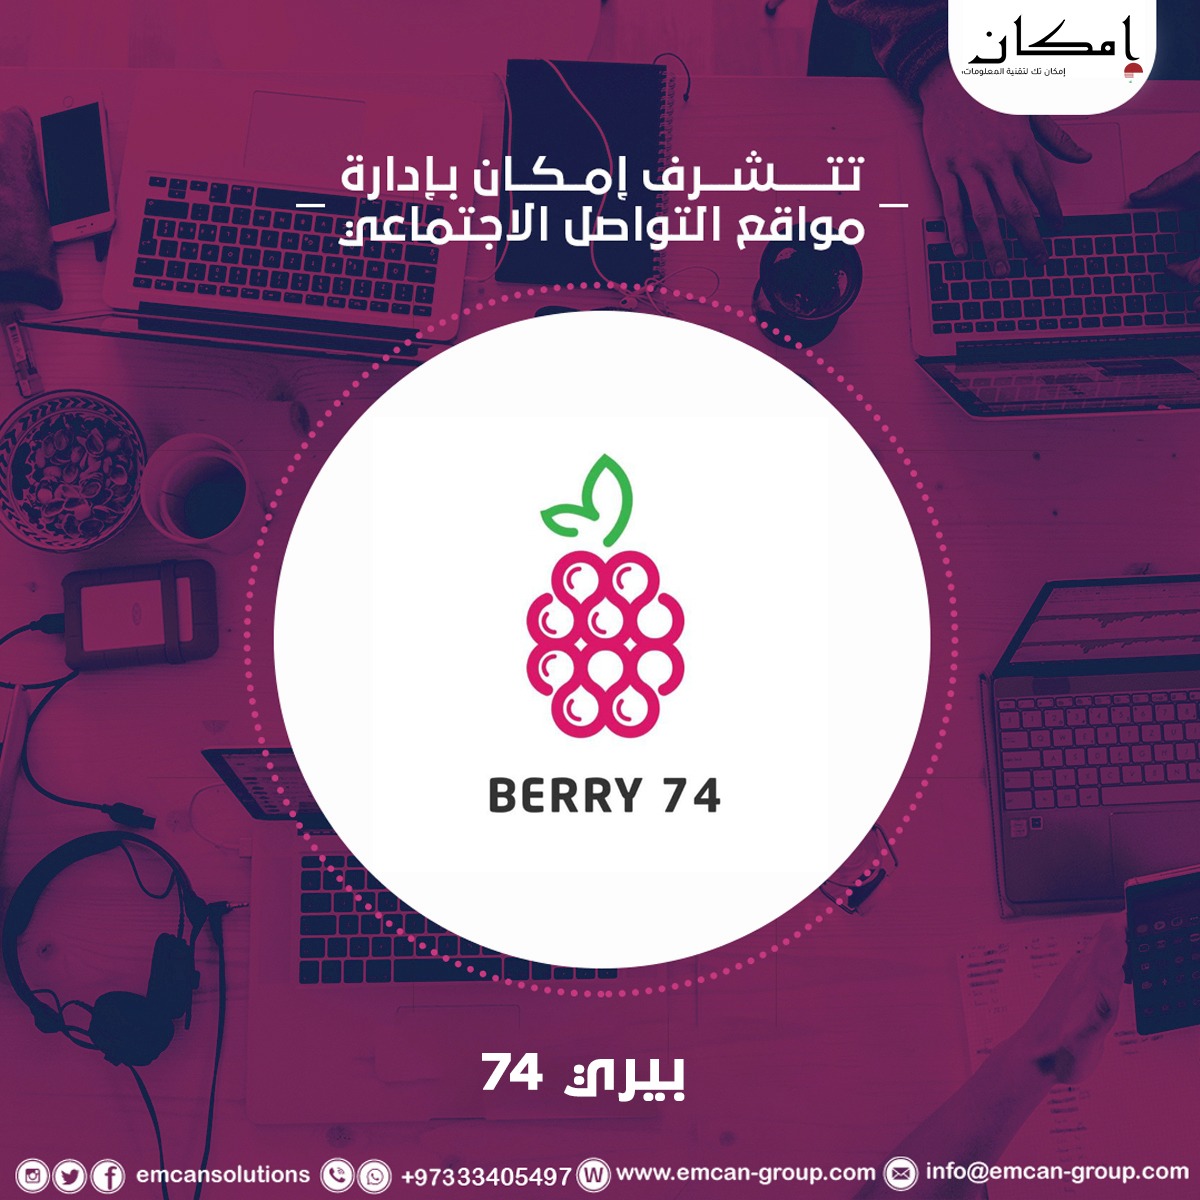 Social media management for Berry 74